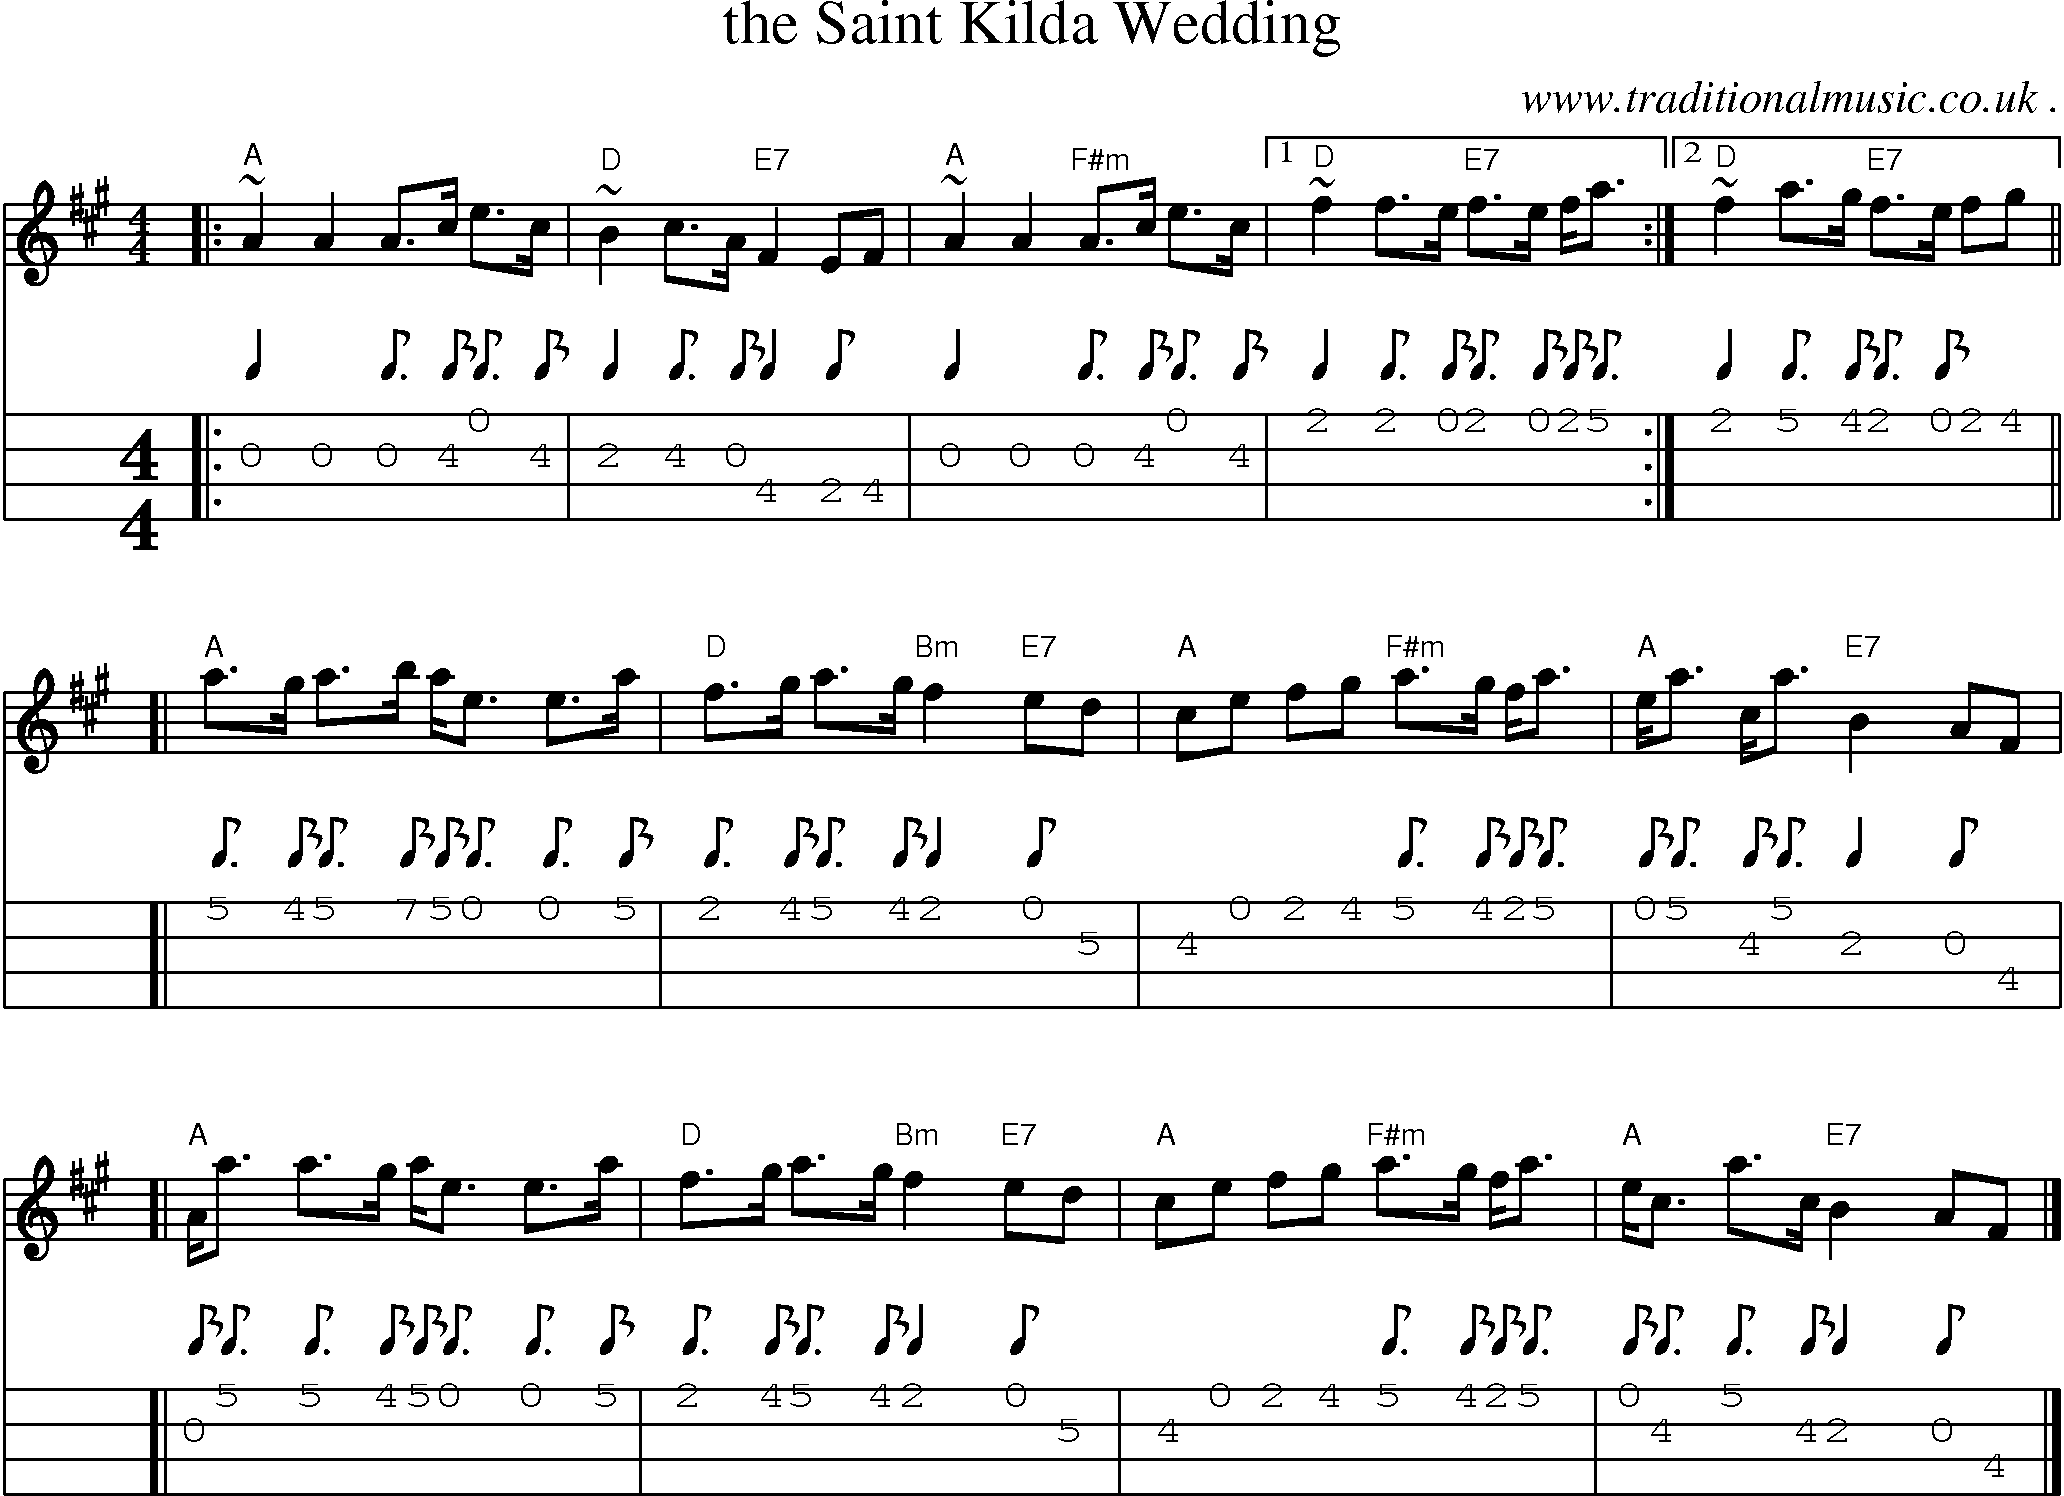 Sheet-music  score, Chords and Mandolin Tabs for The Saint Kilda Wedding